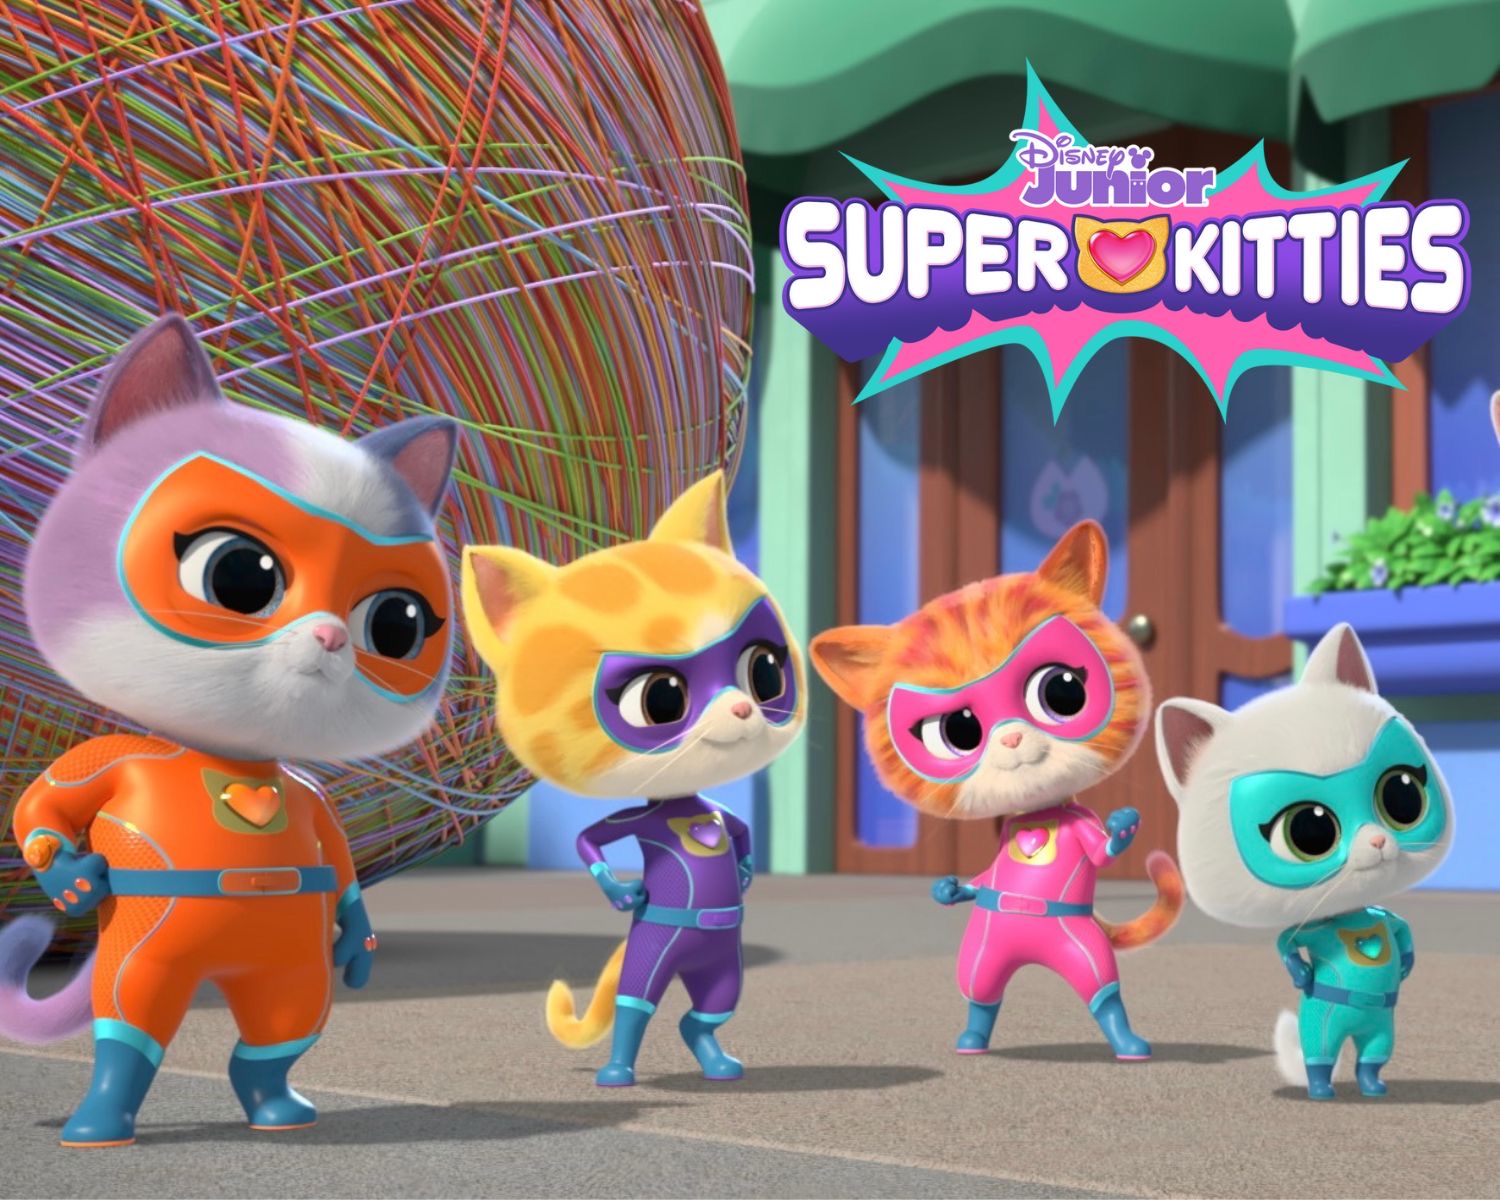 SuperKitties debuts on Disney+ and Disney Jr. January 11th